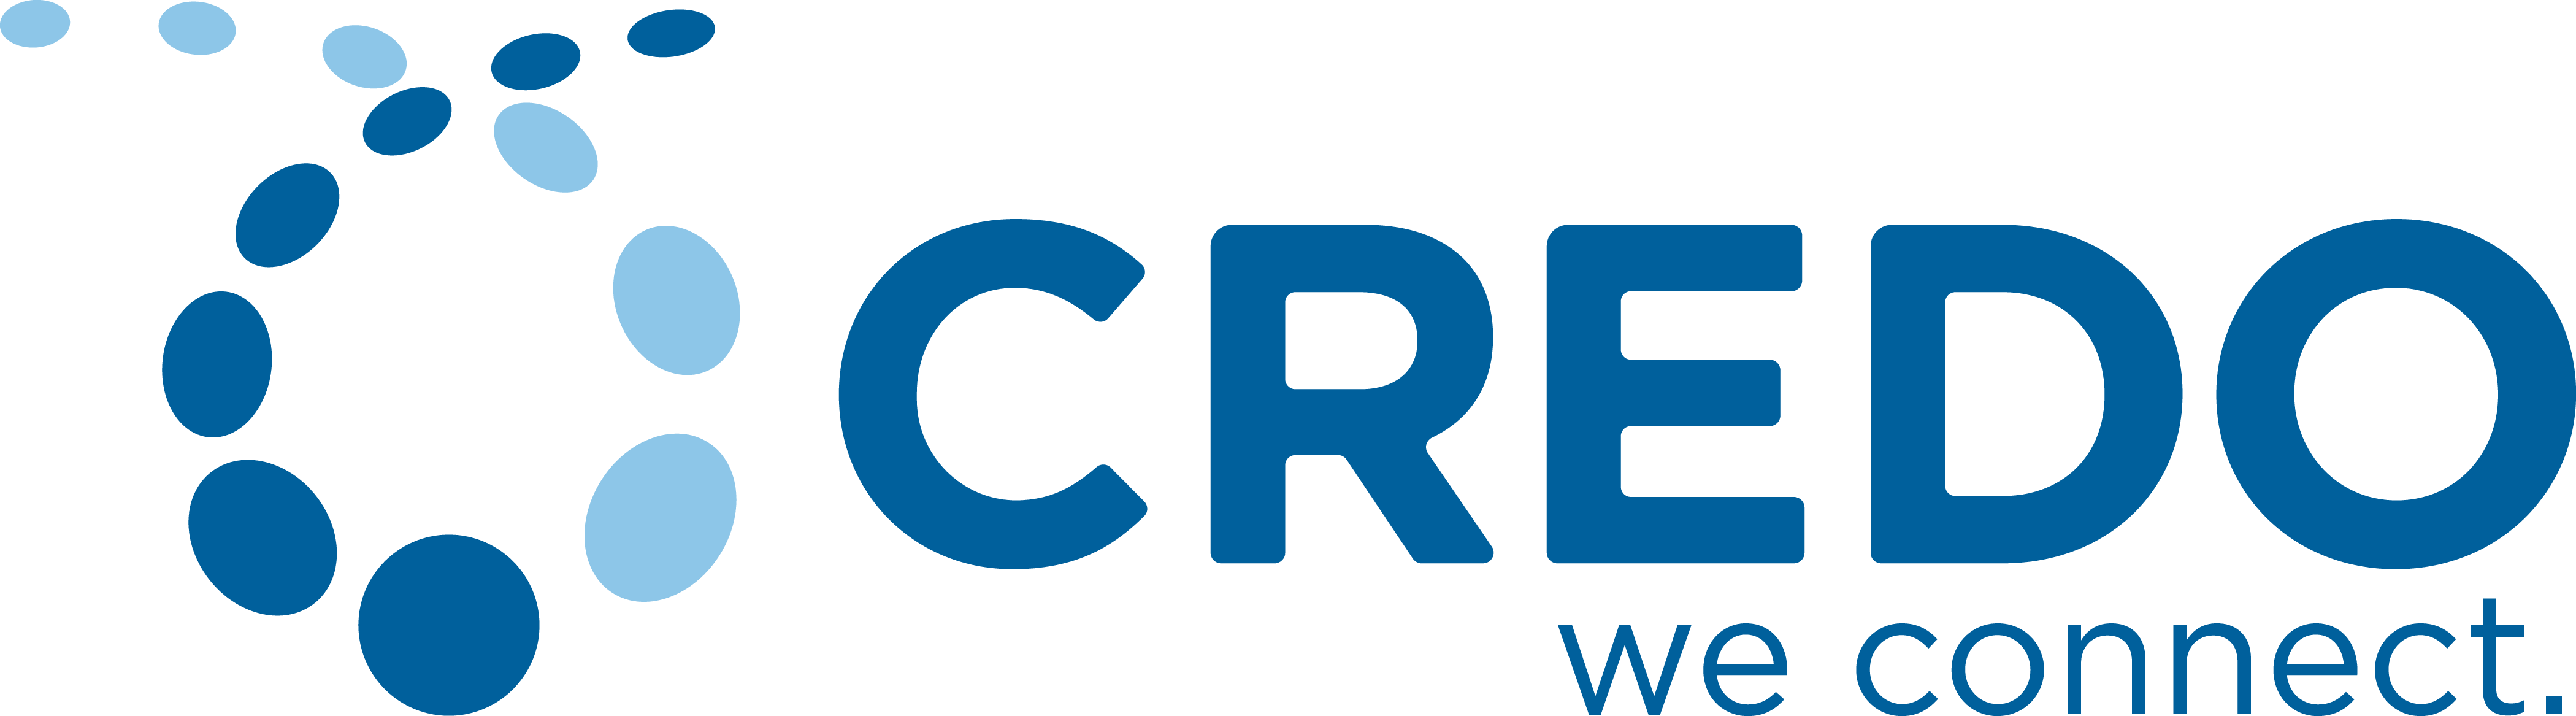 Credo-logo-tagline-rgb